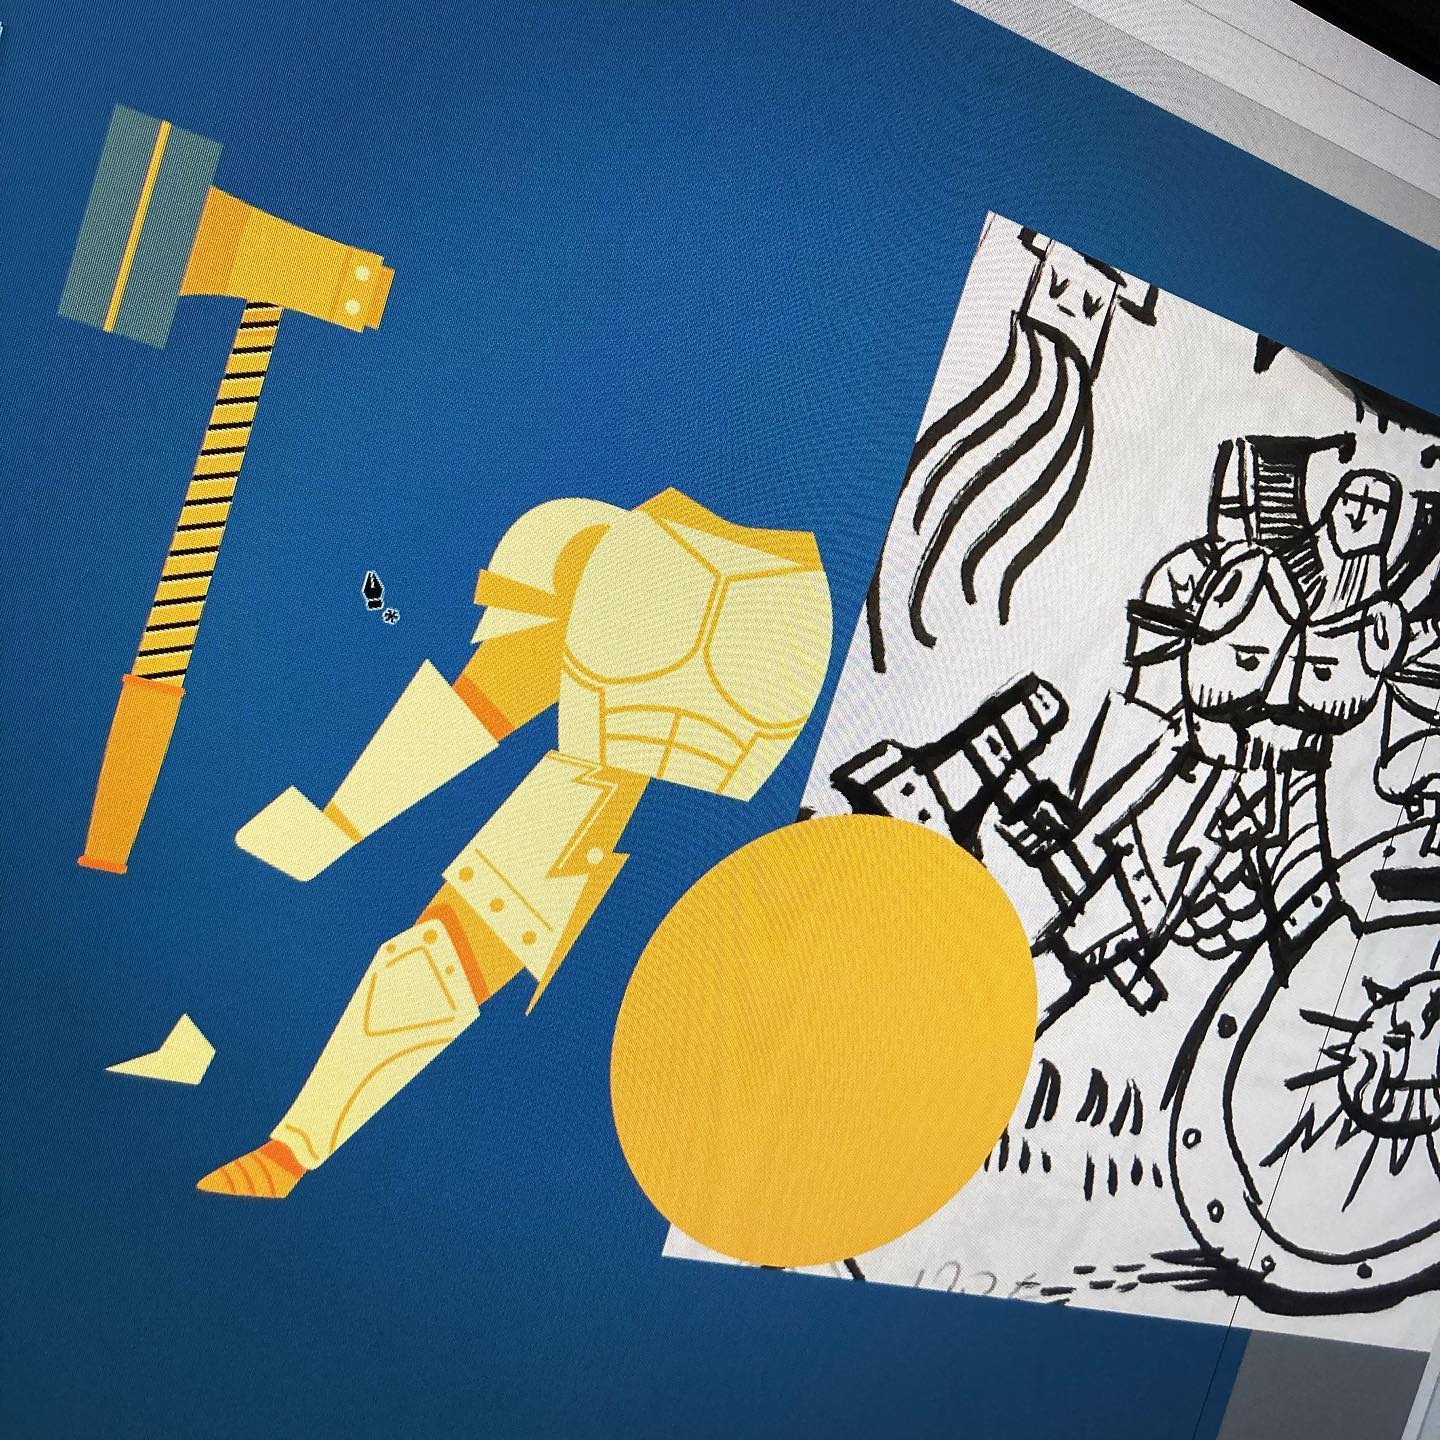 Design process in Illustrator based on a sketch (work in progress)..#warhammer #illustrationv #vectorart #warrior #vectorillustration #wip #adobeillustrator #miniature #ageofsigmar #εικονογράφηση #sounasart #vectordesign #vector